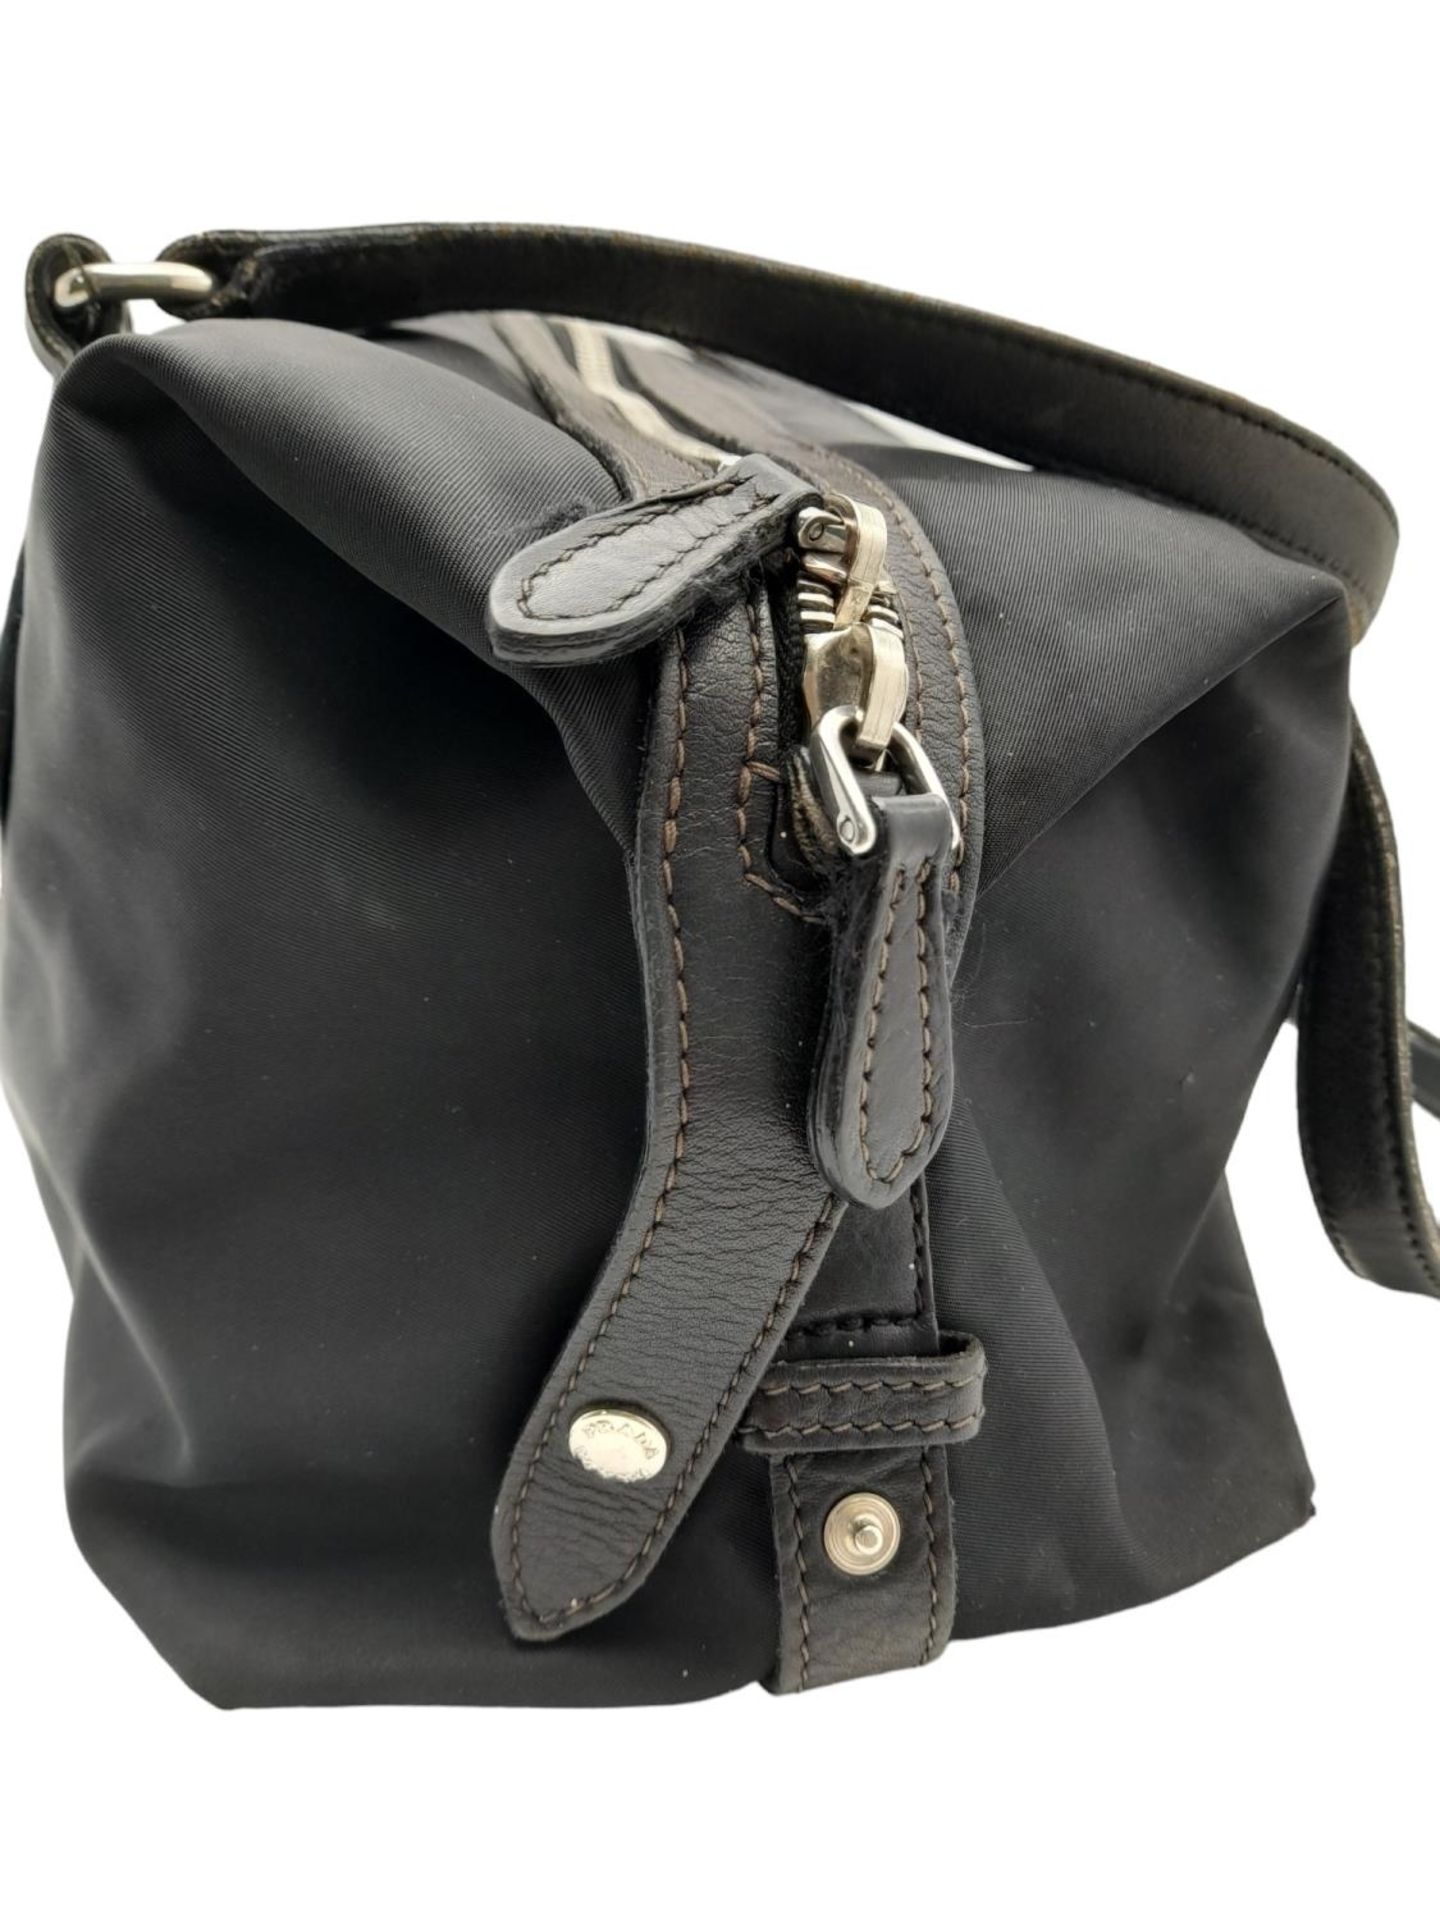 A Prada Black Tessuto Satchel. Textile exterior with leather trim, silver-tone hardware, a top zip - Image 5 of 7